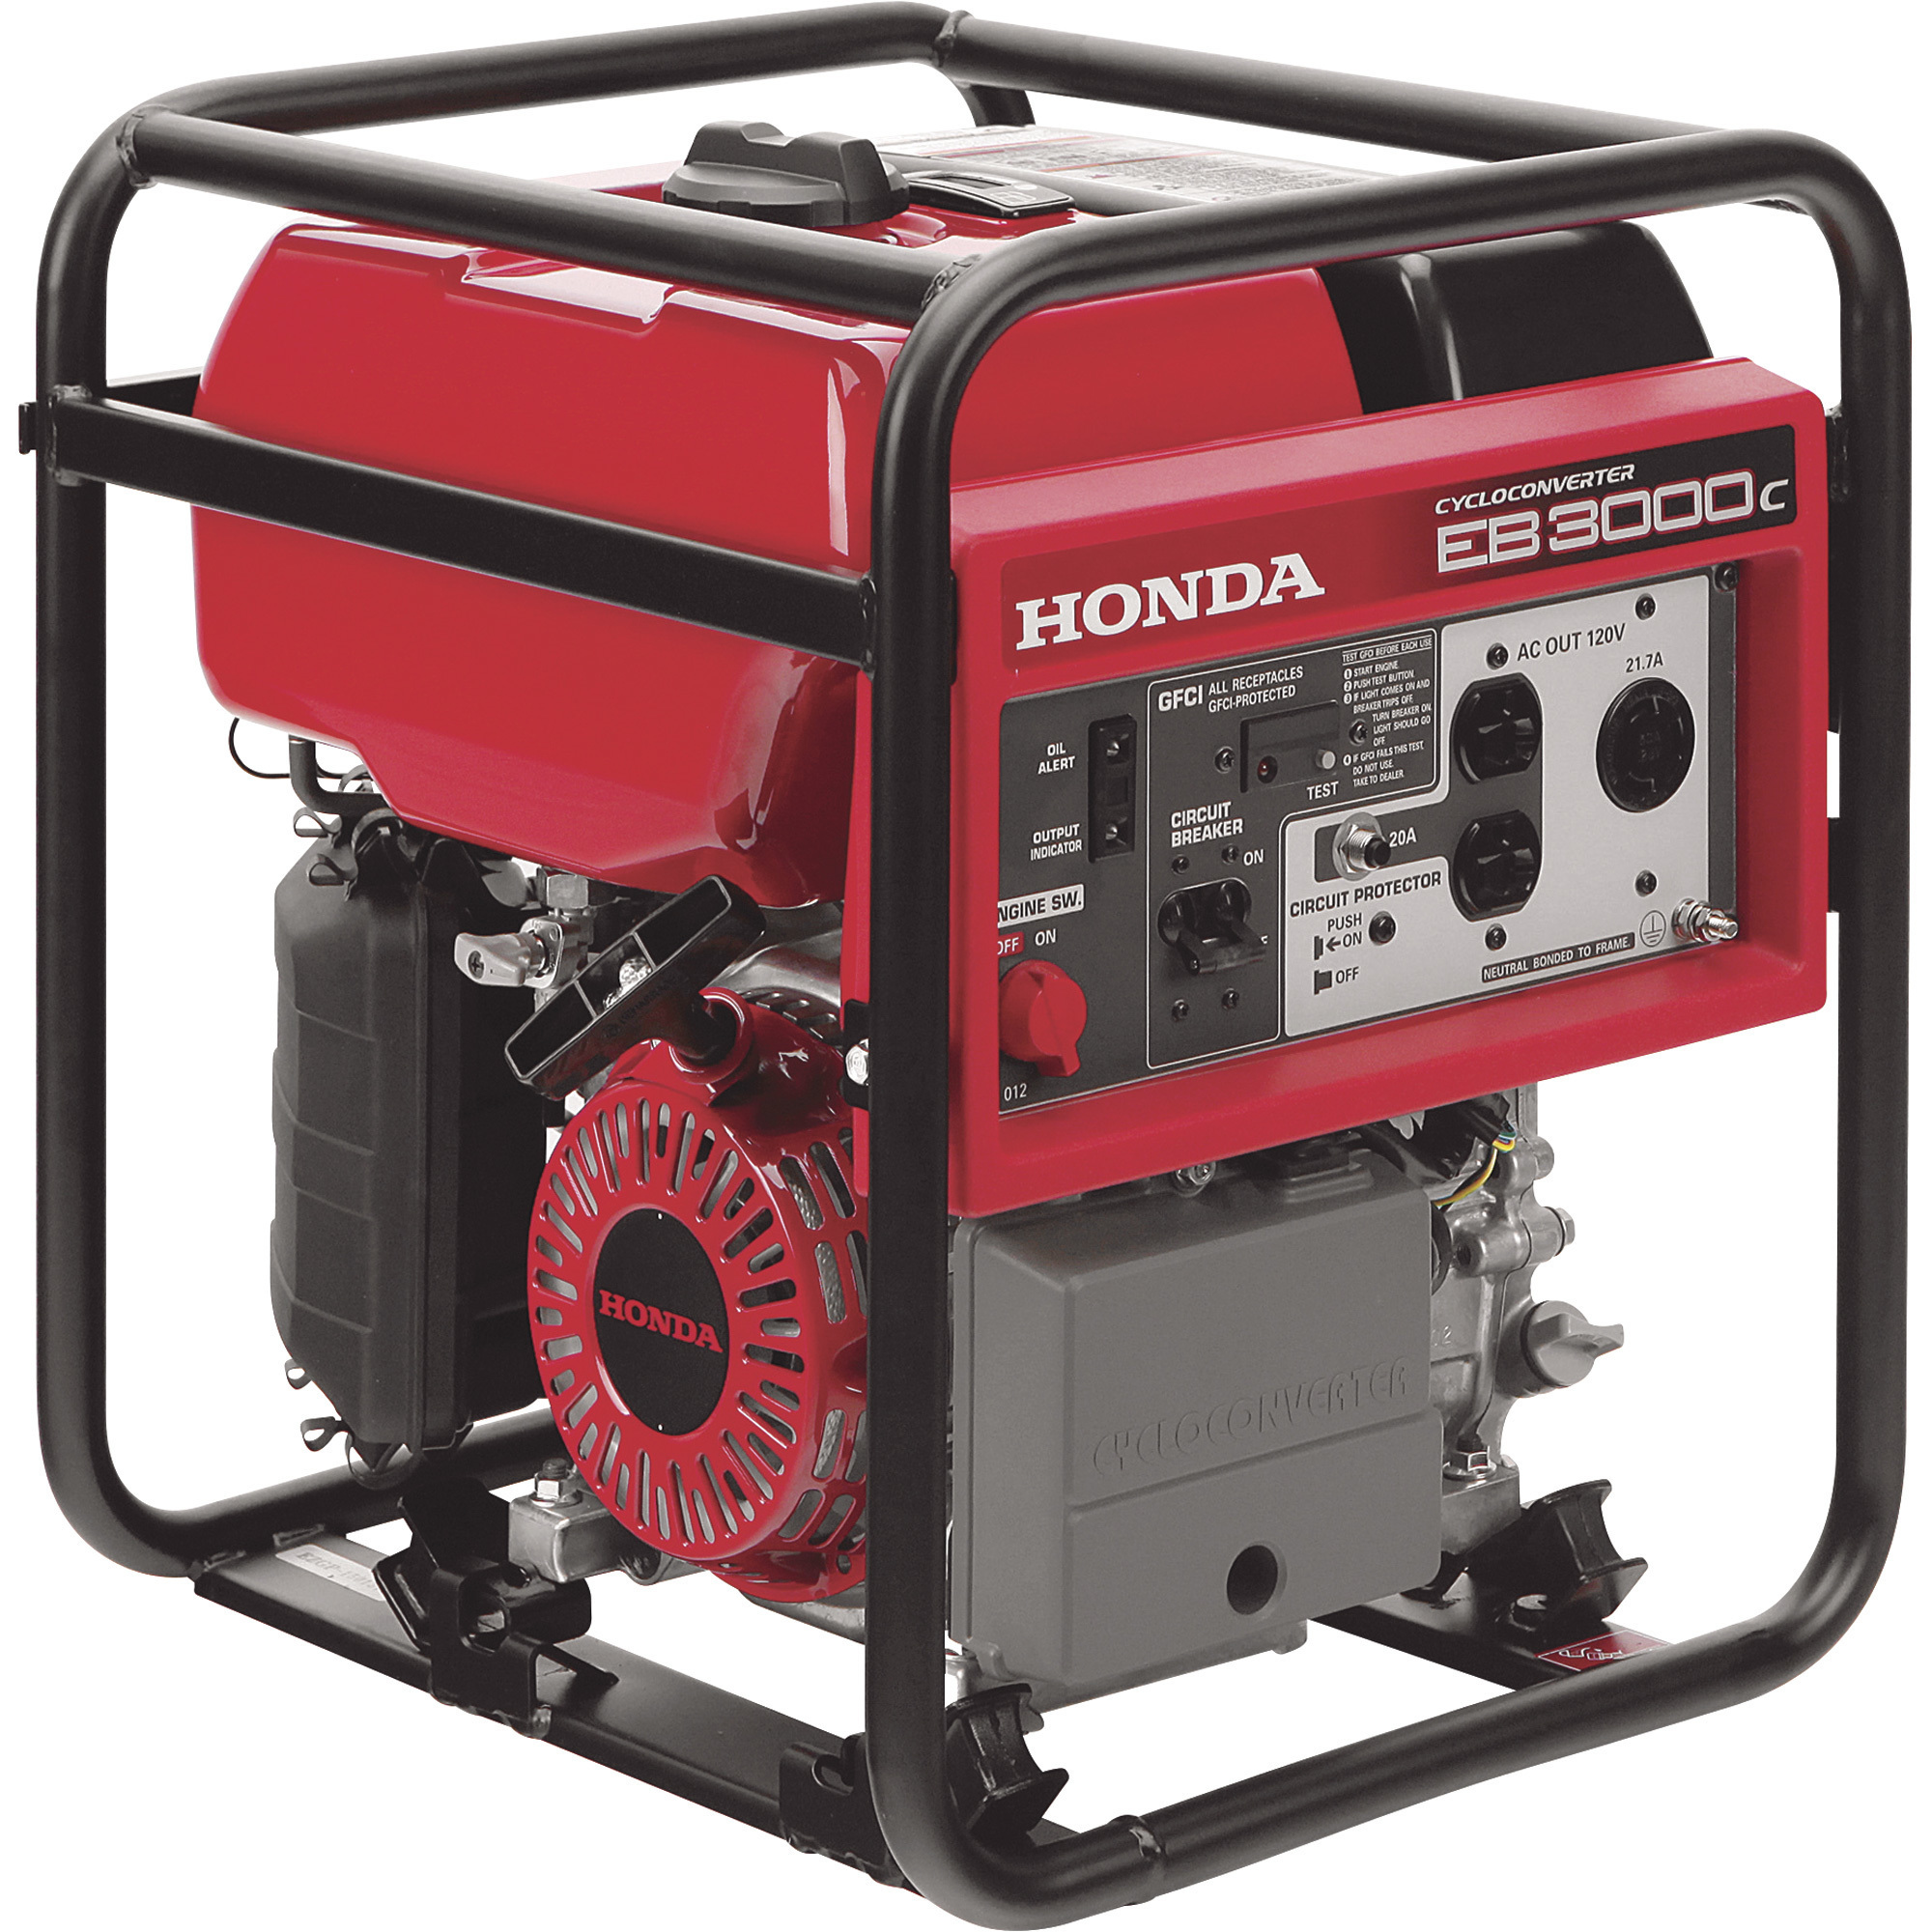 Honda EB3000C CYCLOCONVERTER Portable Generator — Surge Watts, Watts, CARB-Compliant, Model# EB3000CK2A | Northern Tool